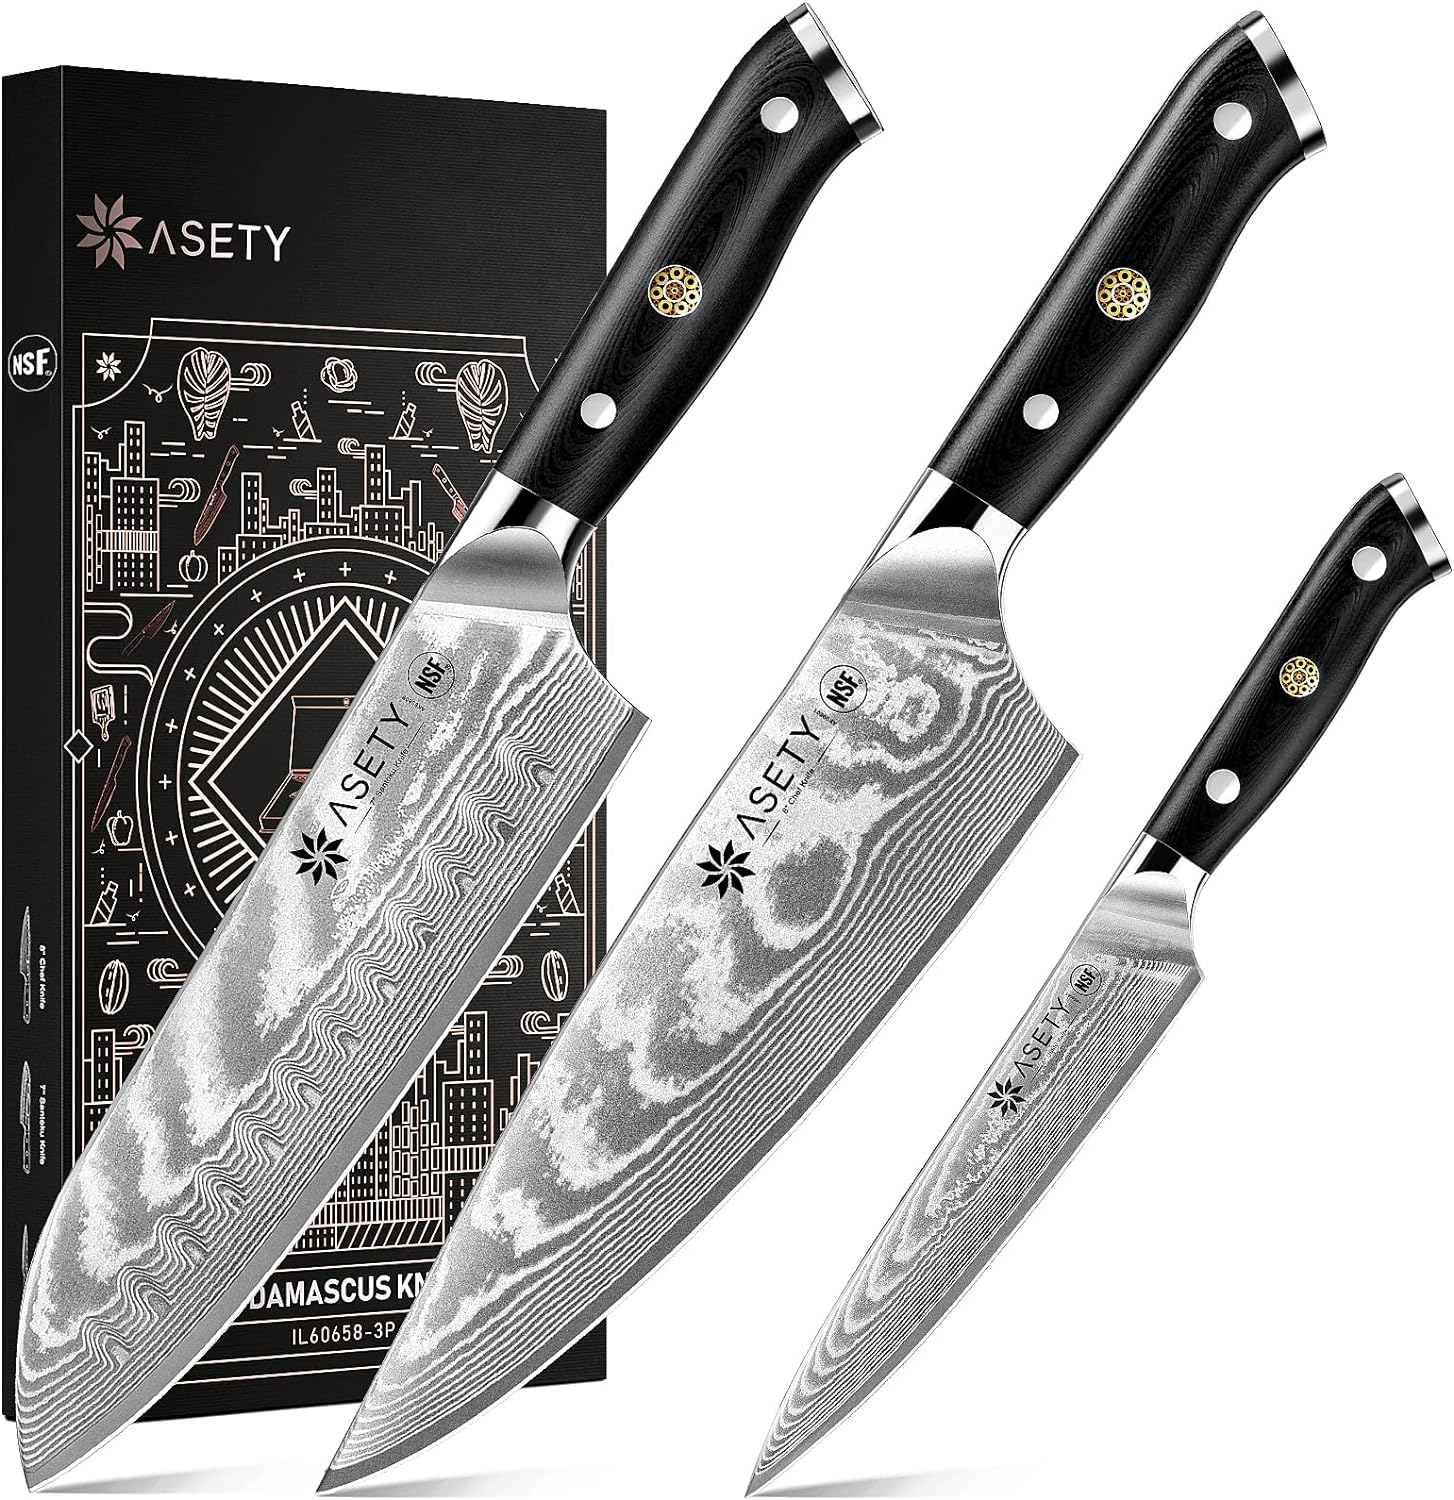 Damascus Knife Set 3 PCS, NSF Food-Safe Japanese Kitchen Knife Set with VG10 Steel Core